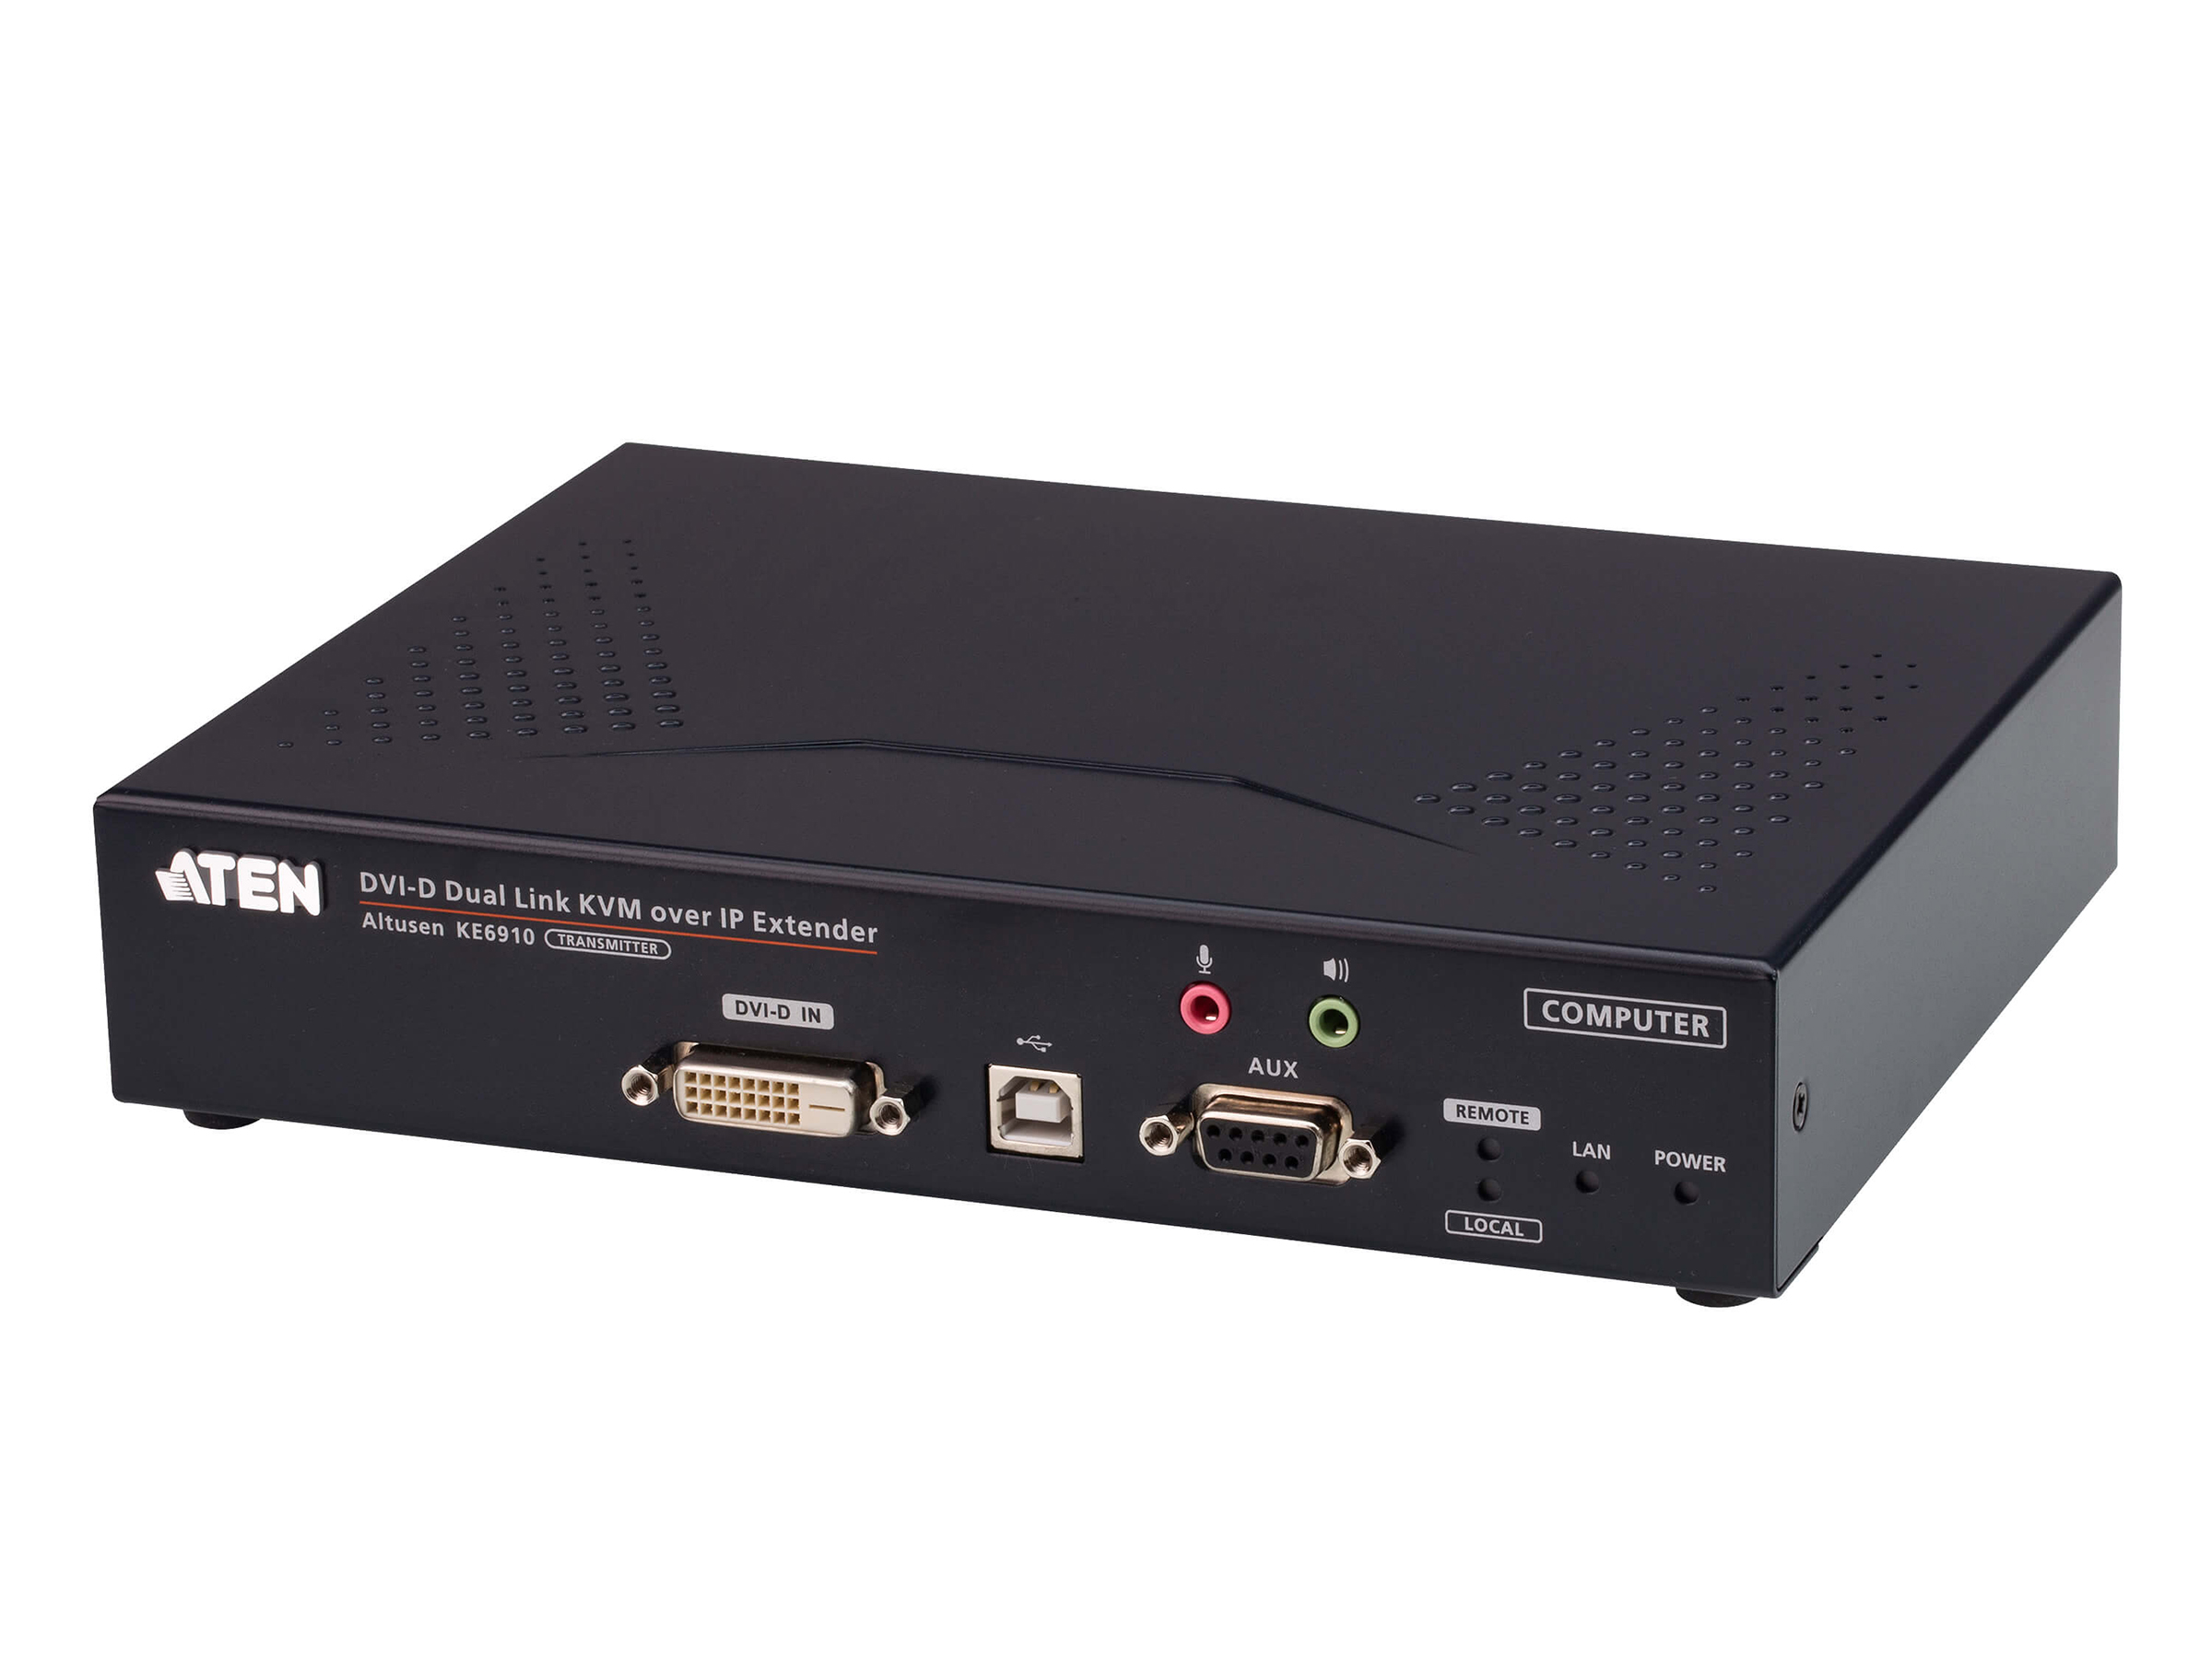 KE6910T USB Dual Link DVI-D Single Display Dual Link KVM over IP Extender (Transmitter) with Audio by Aten